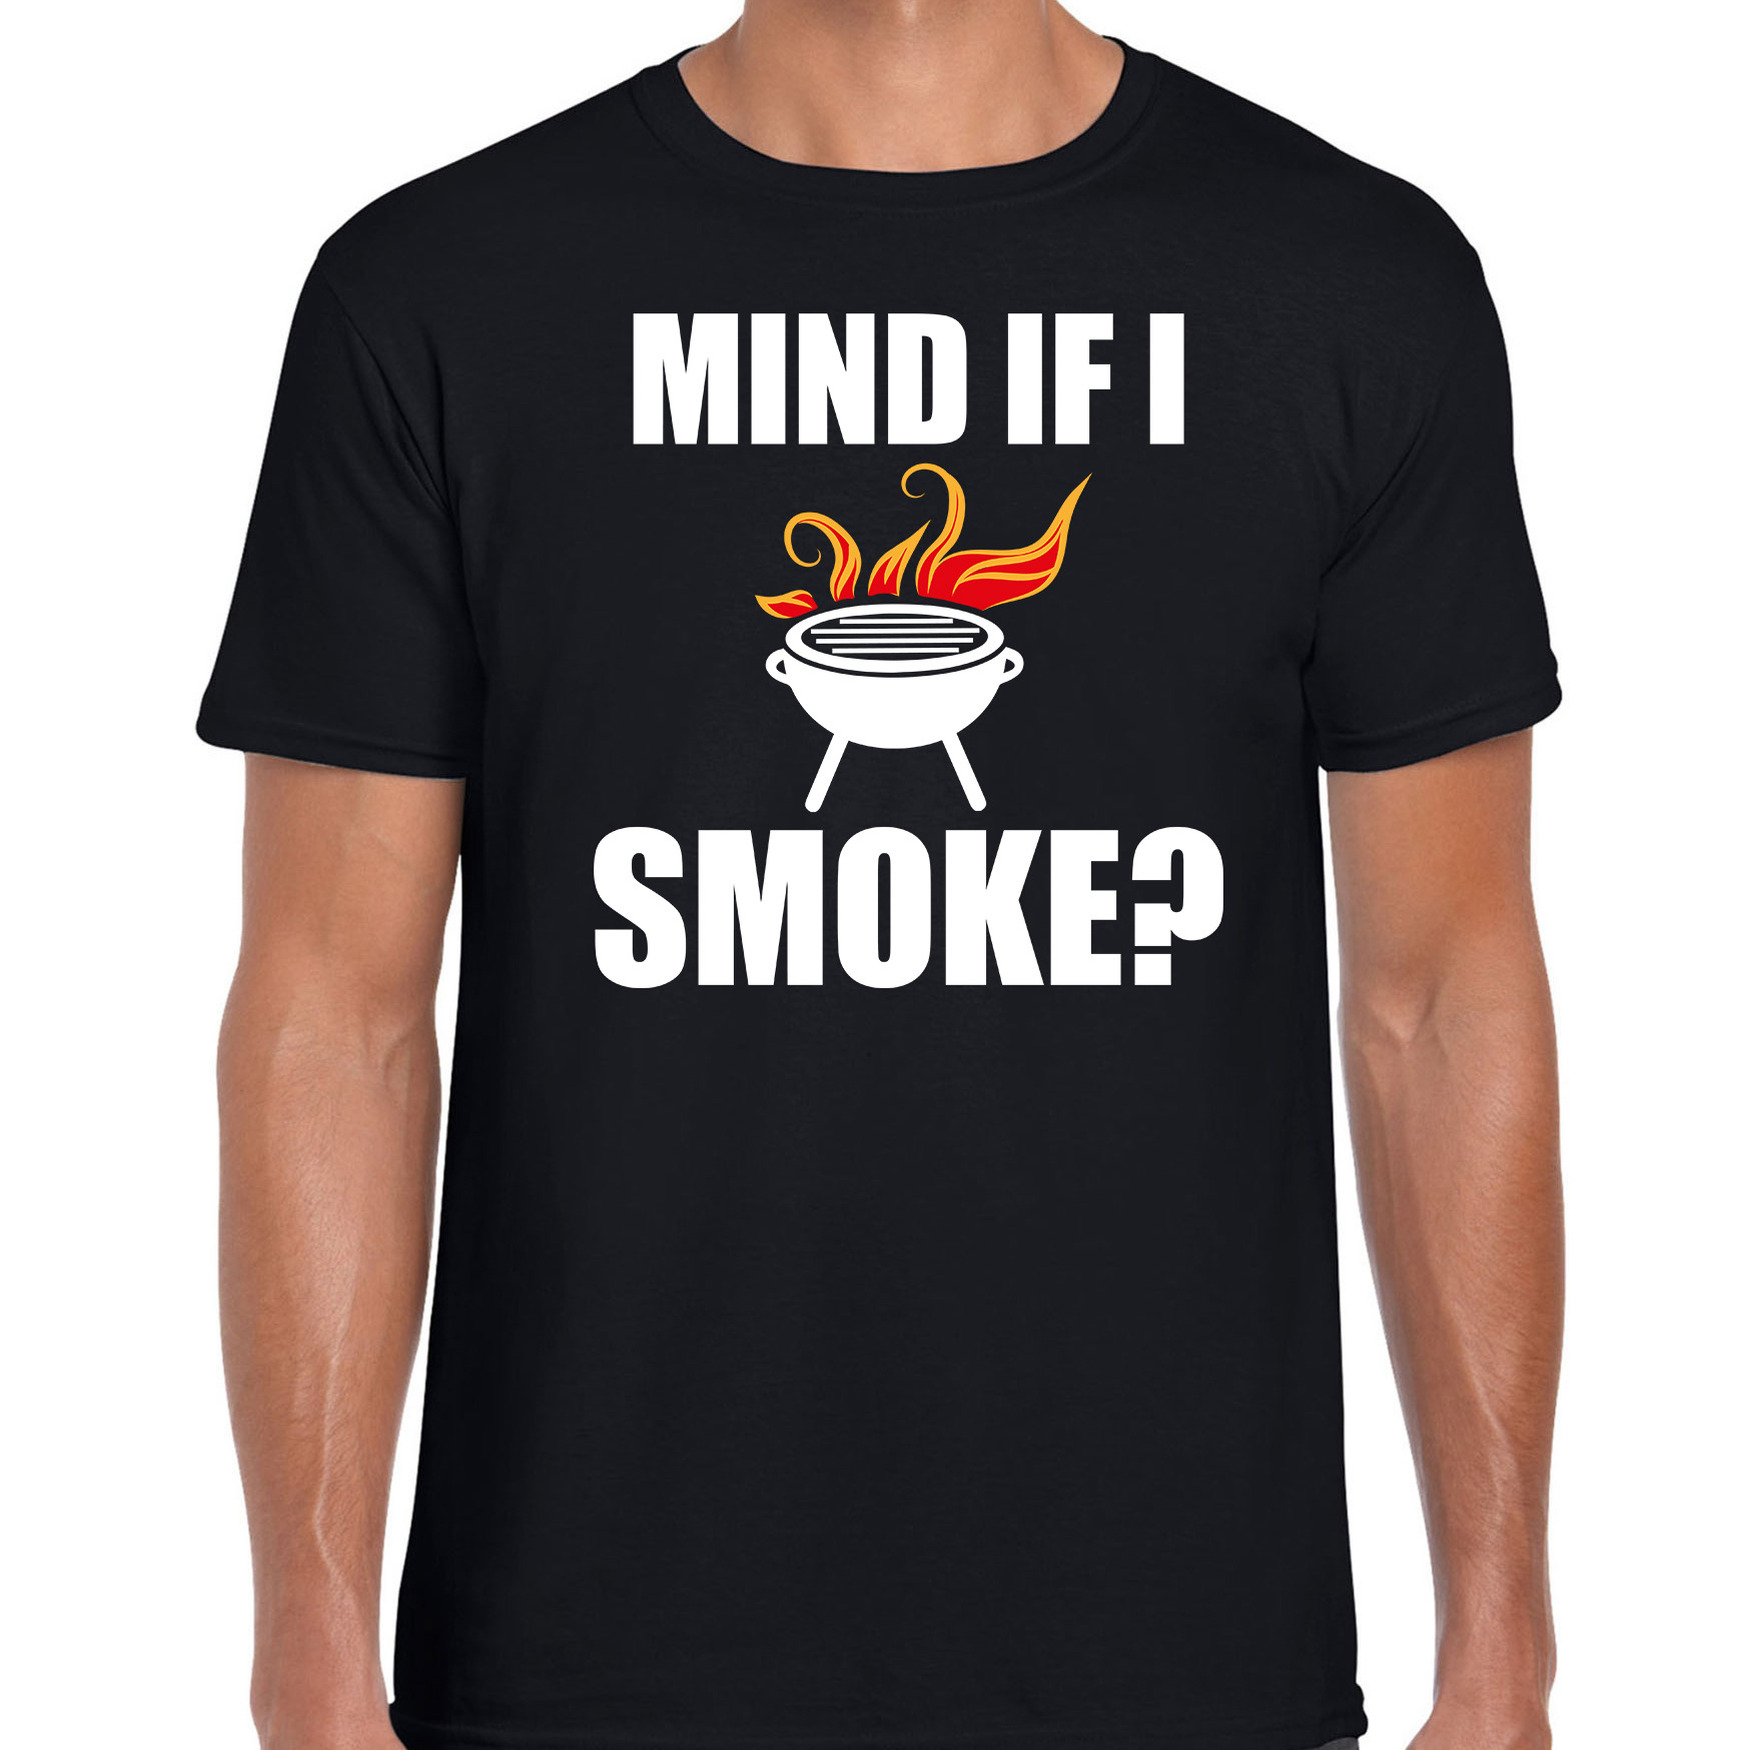 Mind if I smoke bbq-barbecue cadeau t-shirt zwart voor heren